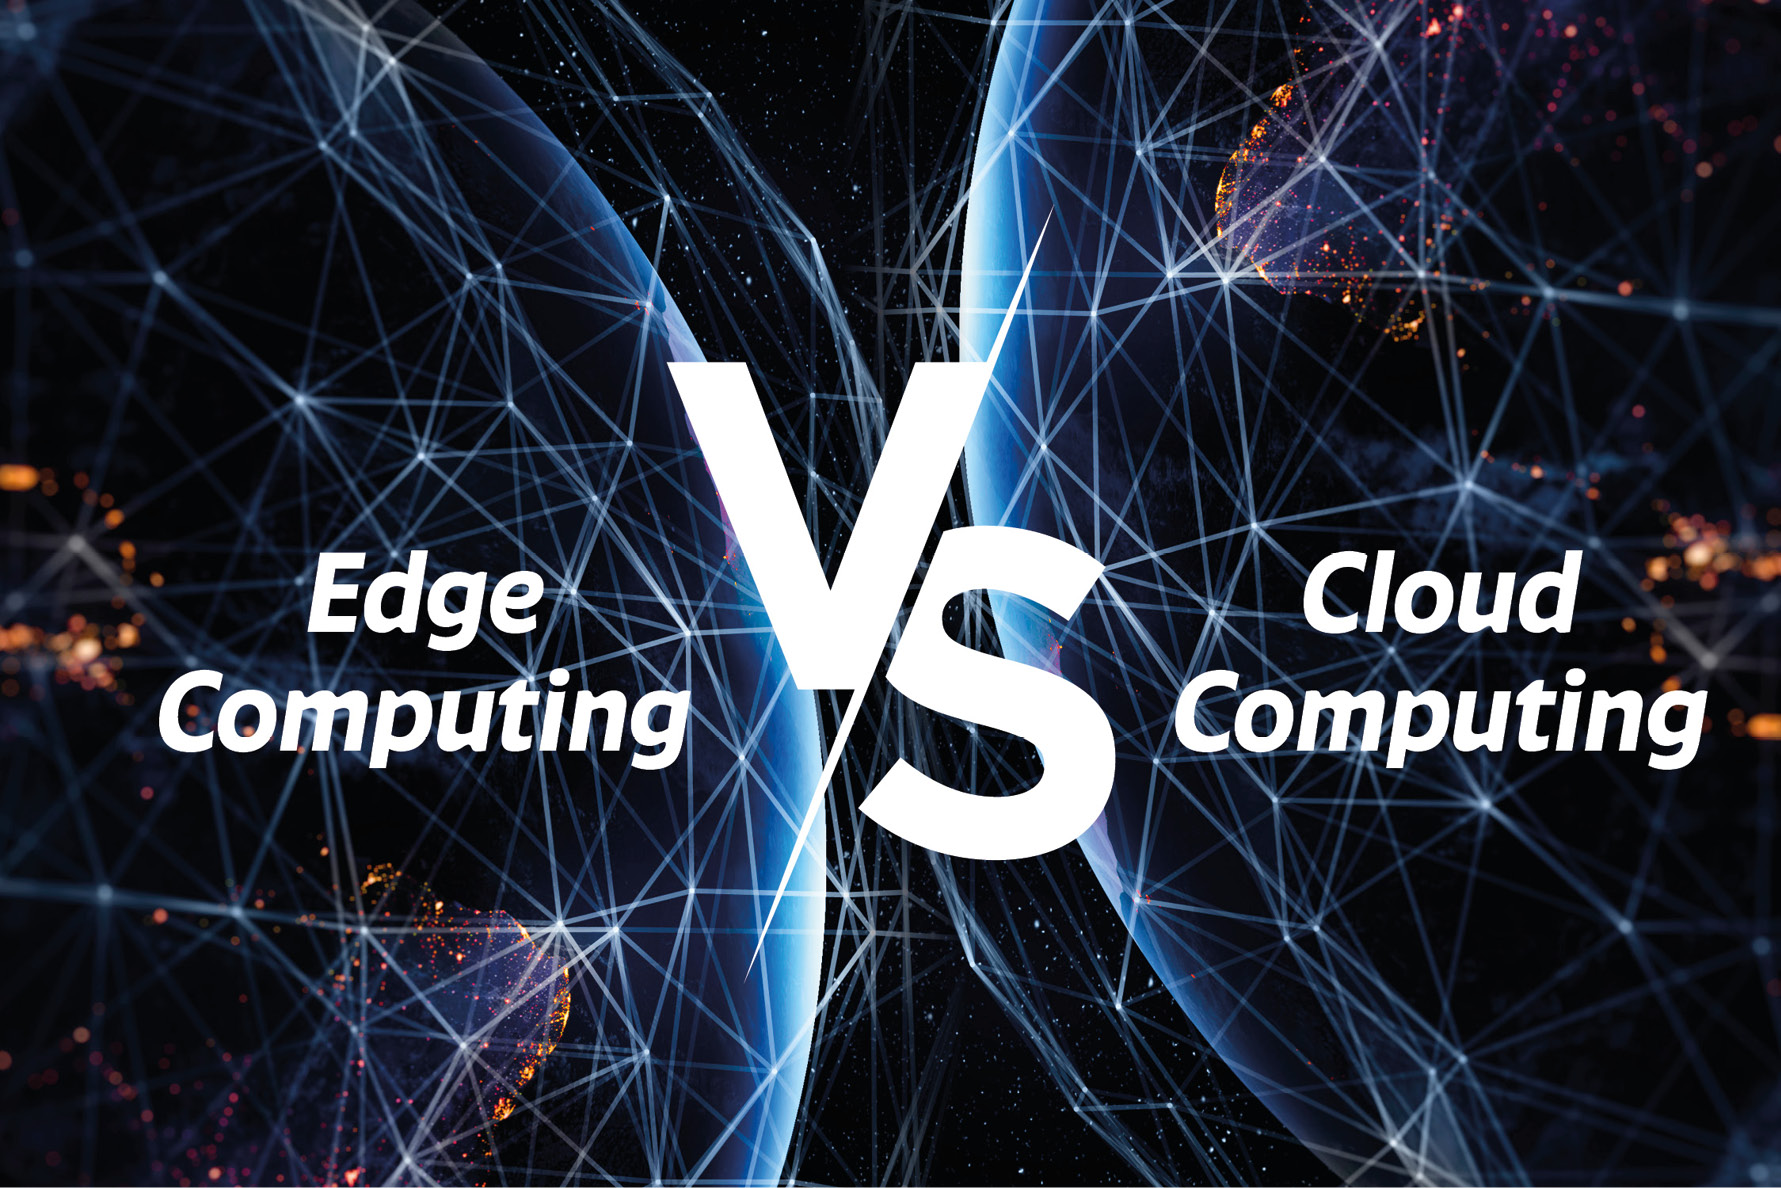 Cloud Computing vs. Edge Computing